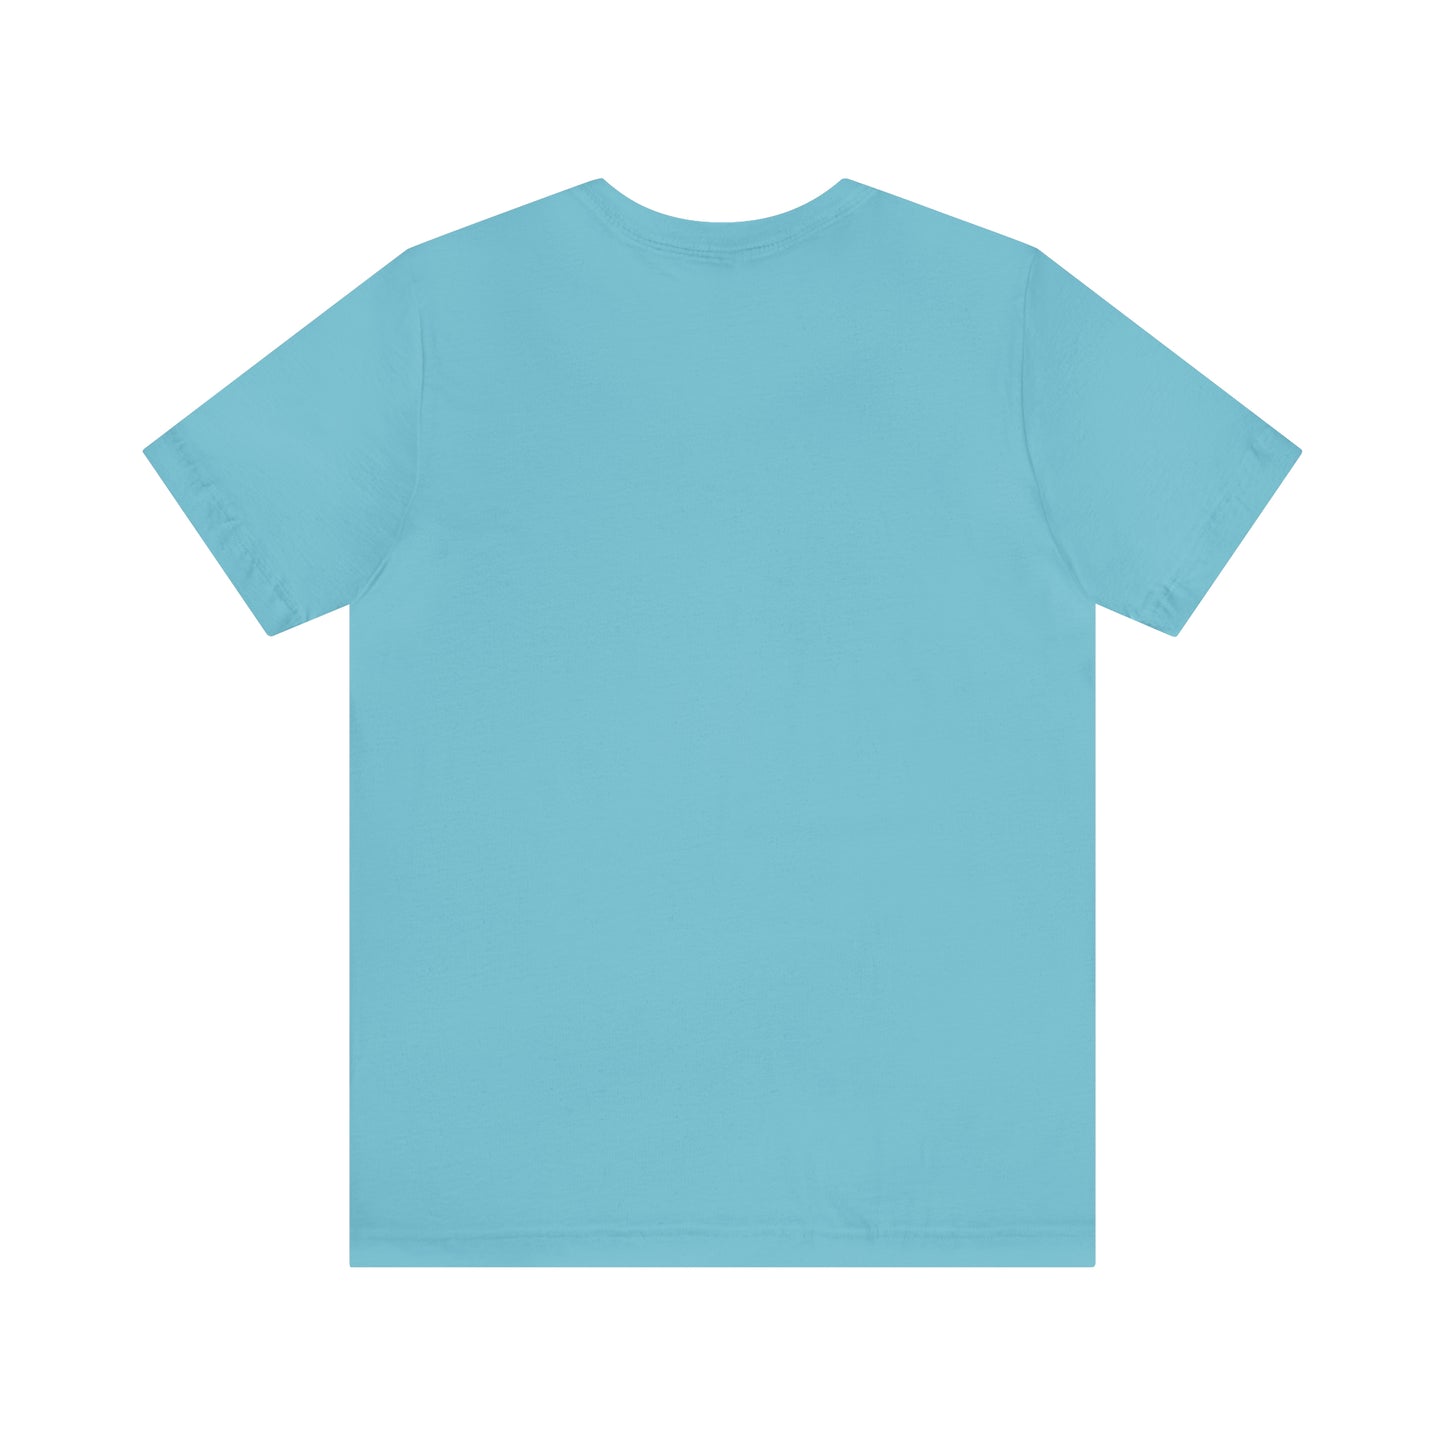 Memorial Day T-Shirt | Memorial Day Gift Idea T-Shirt Petrova Designs